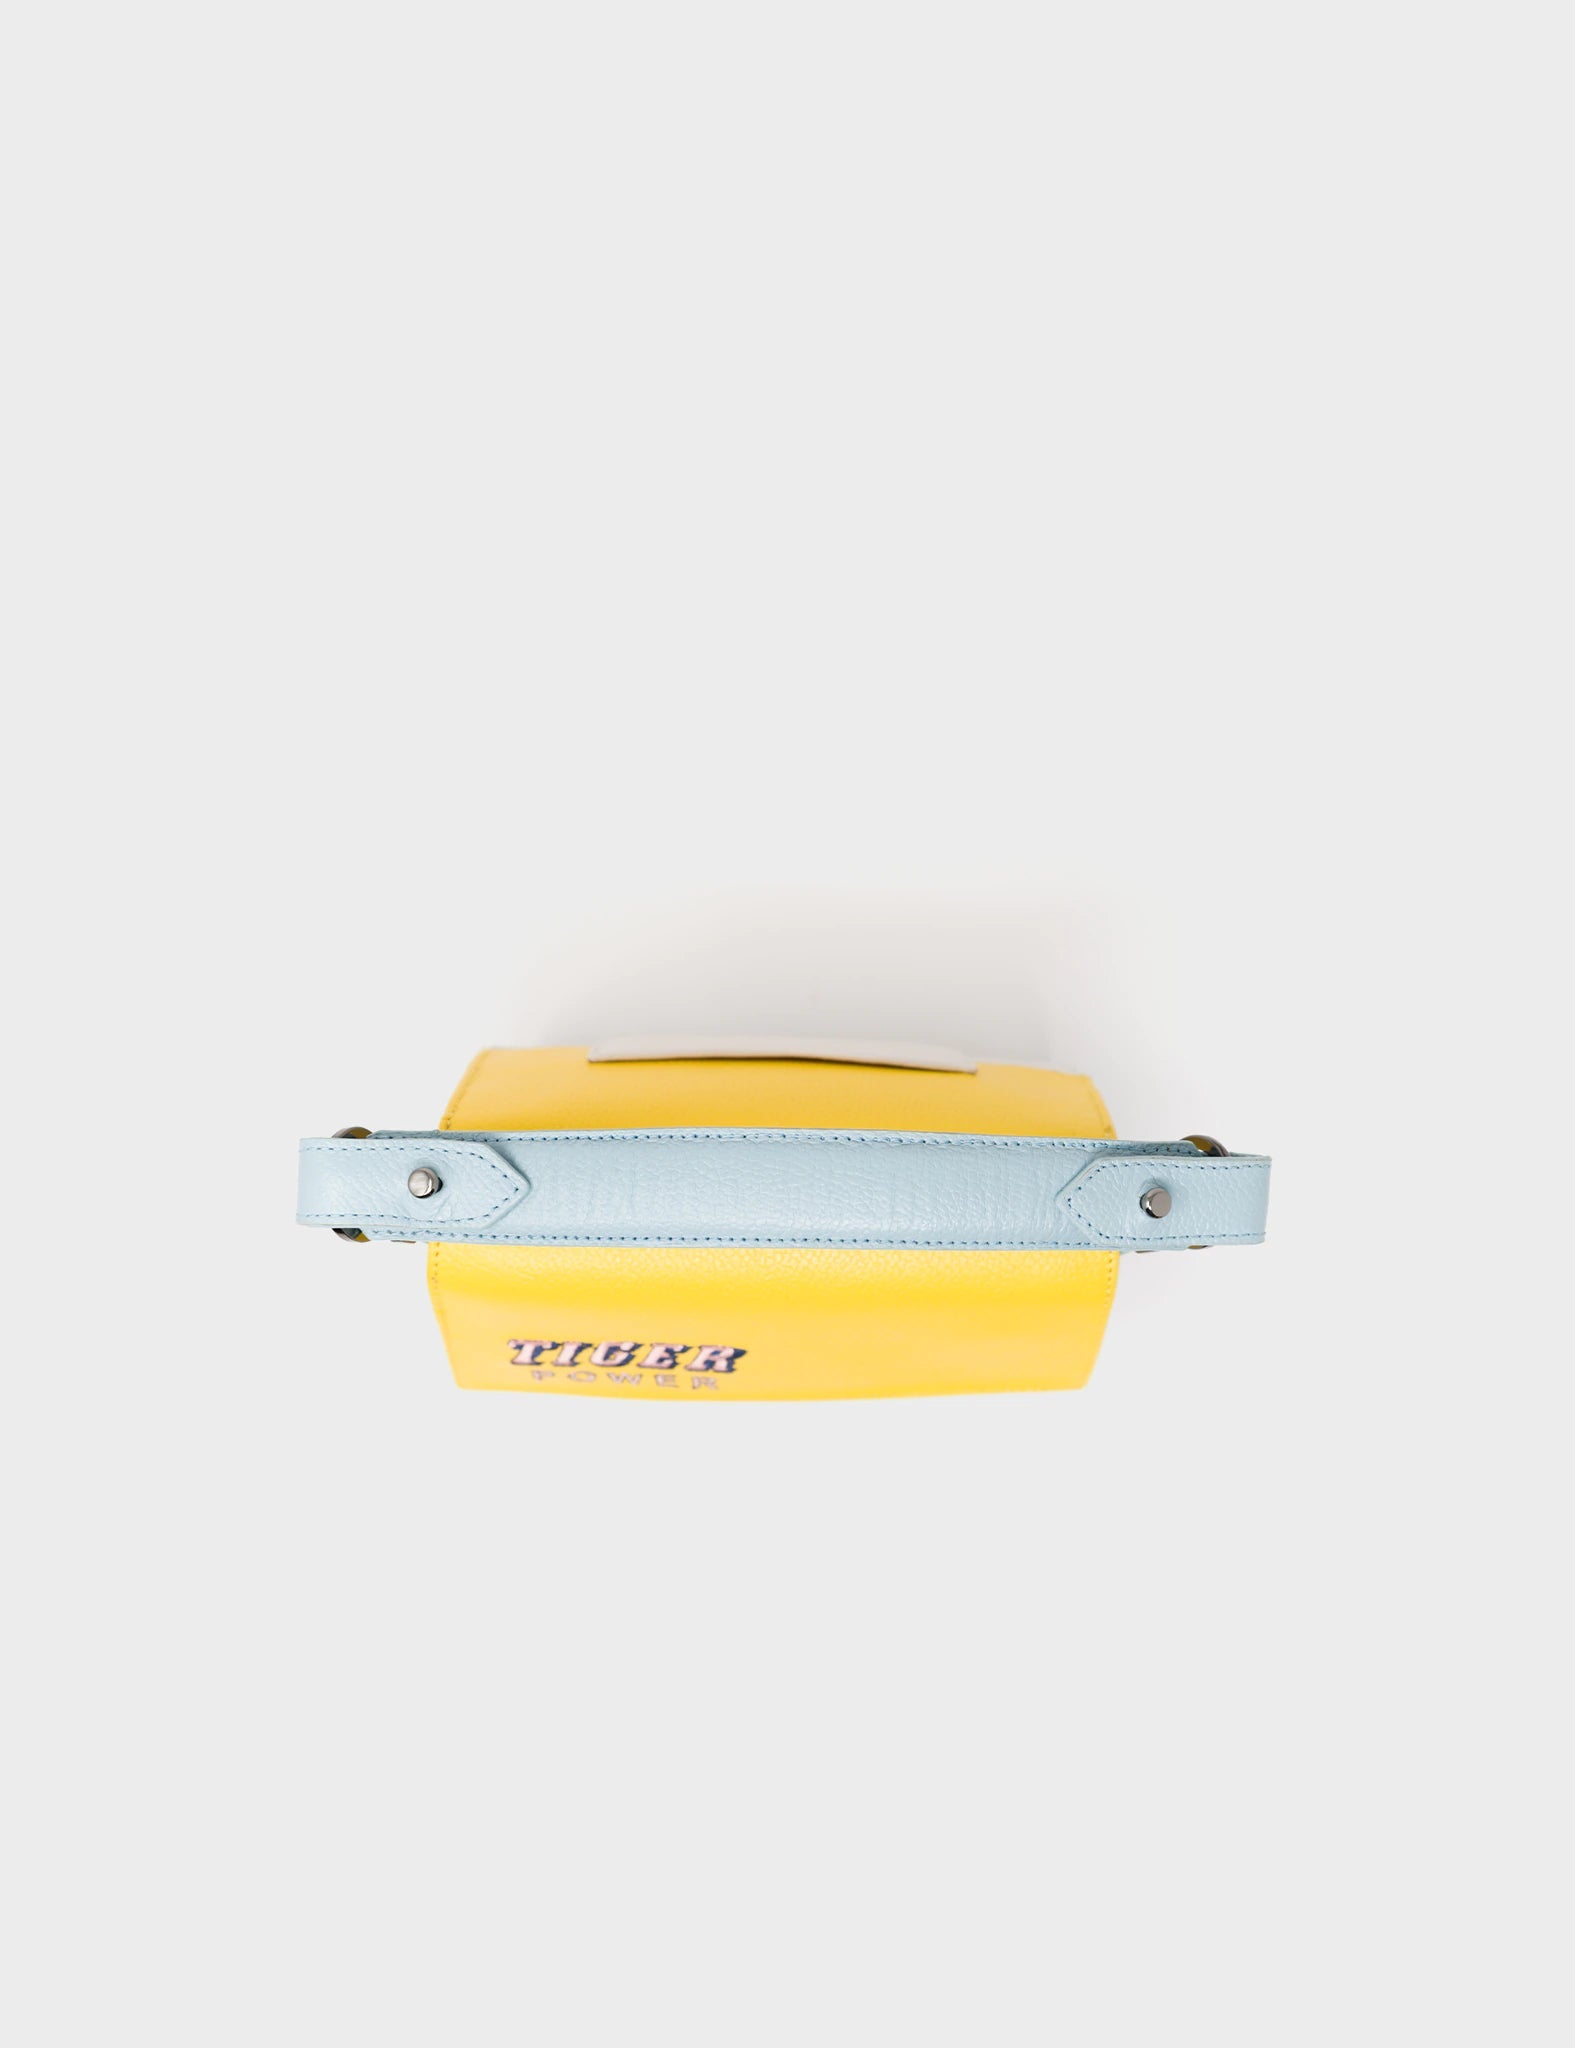 Anastasio Micro Crossbody Handbag Cream and Yellow Leather - Herocity Tiger Power Embroidery - Top view